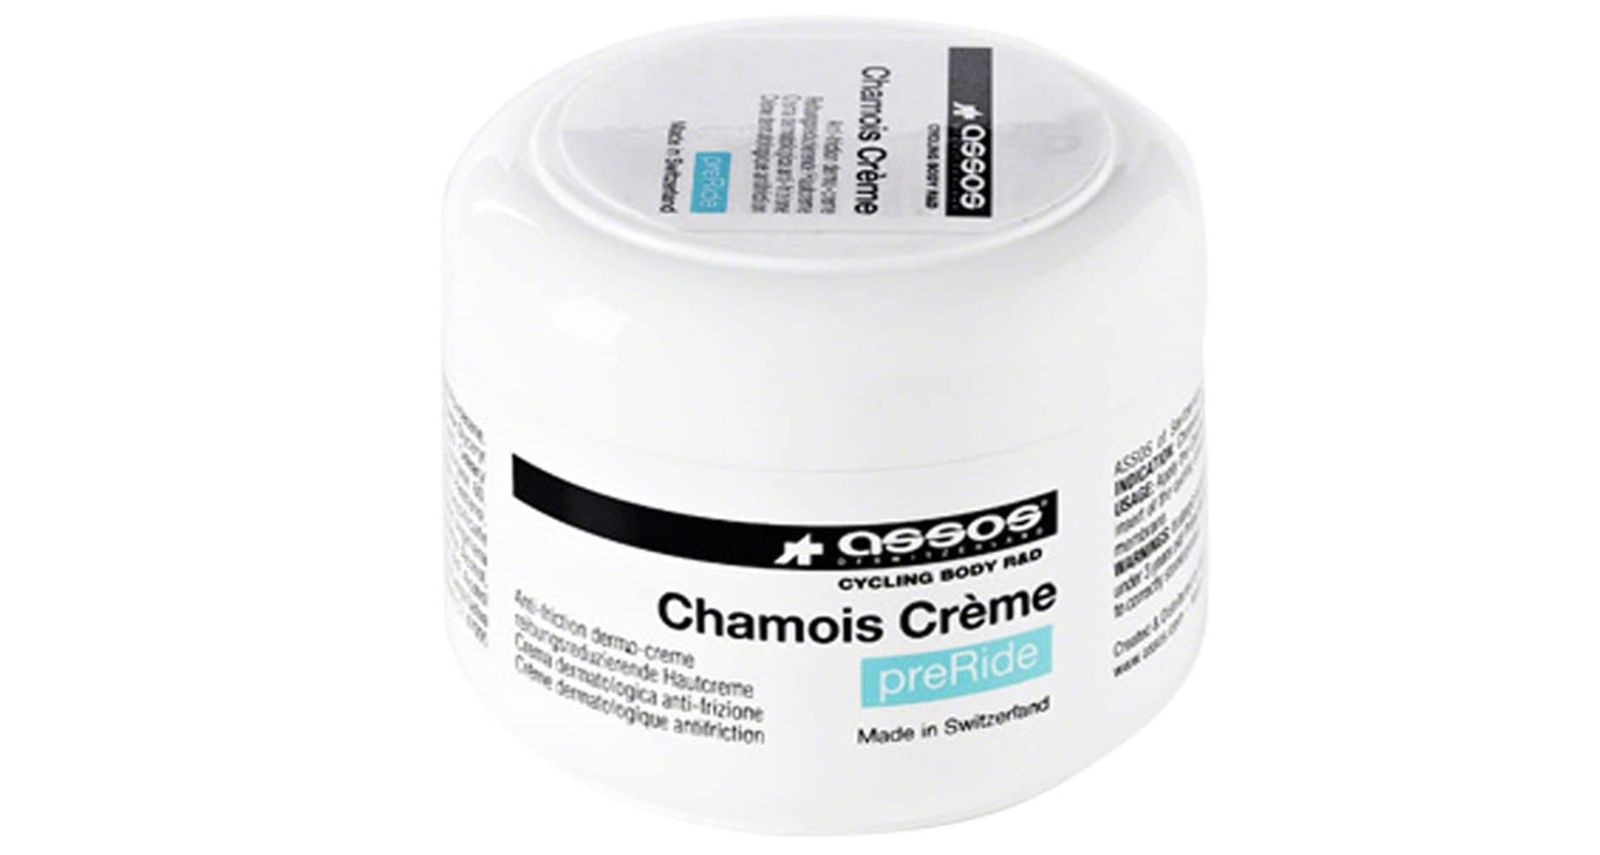 Chamois Butt'r Original Anti-Chafe Cream, 8 oz Tube & Eurostyle Anti-Chafe  Cream, 8 Ounce jar